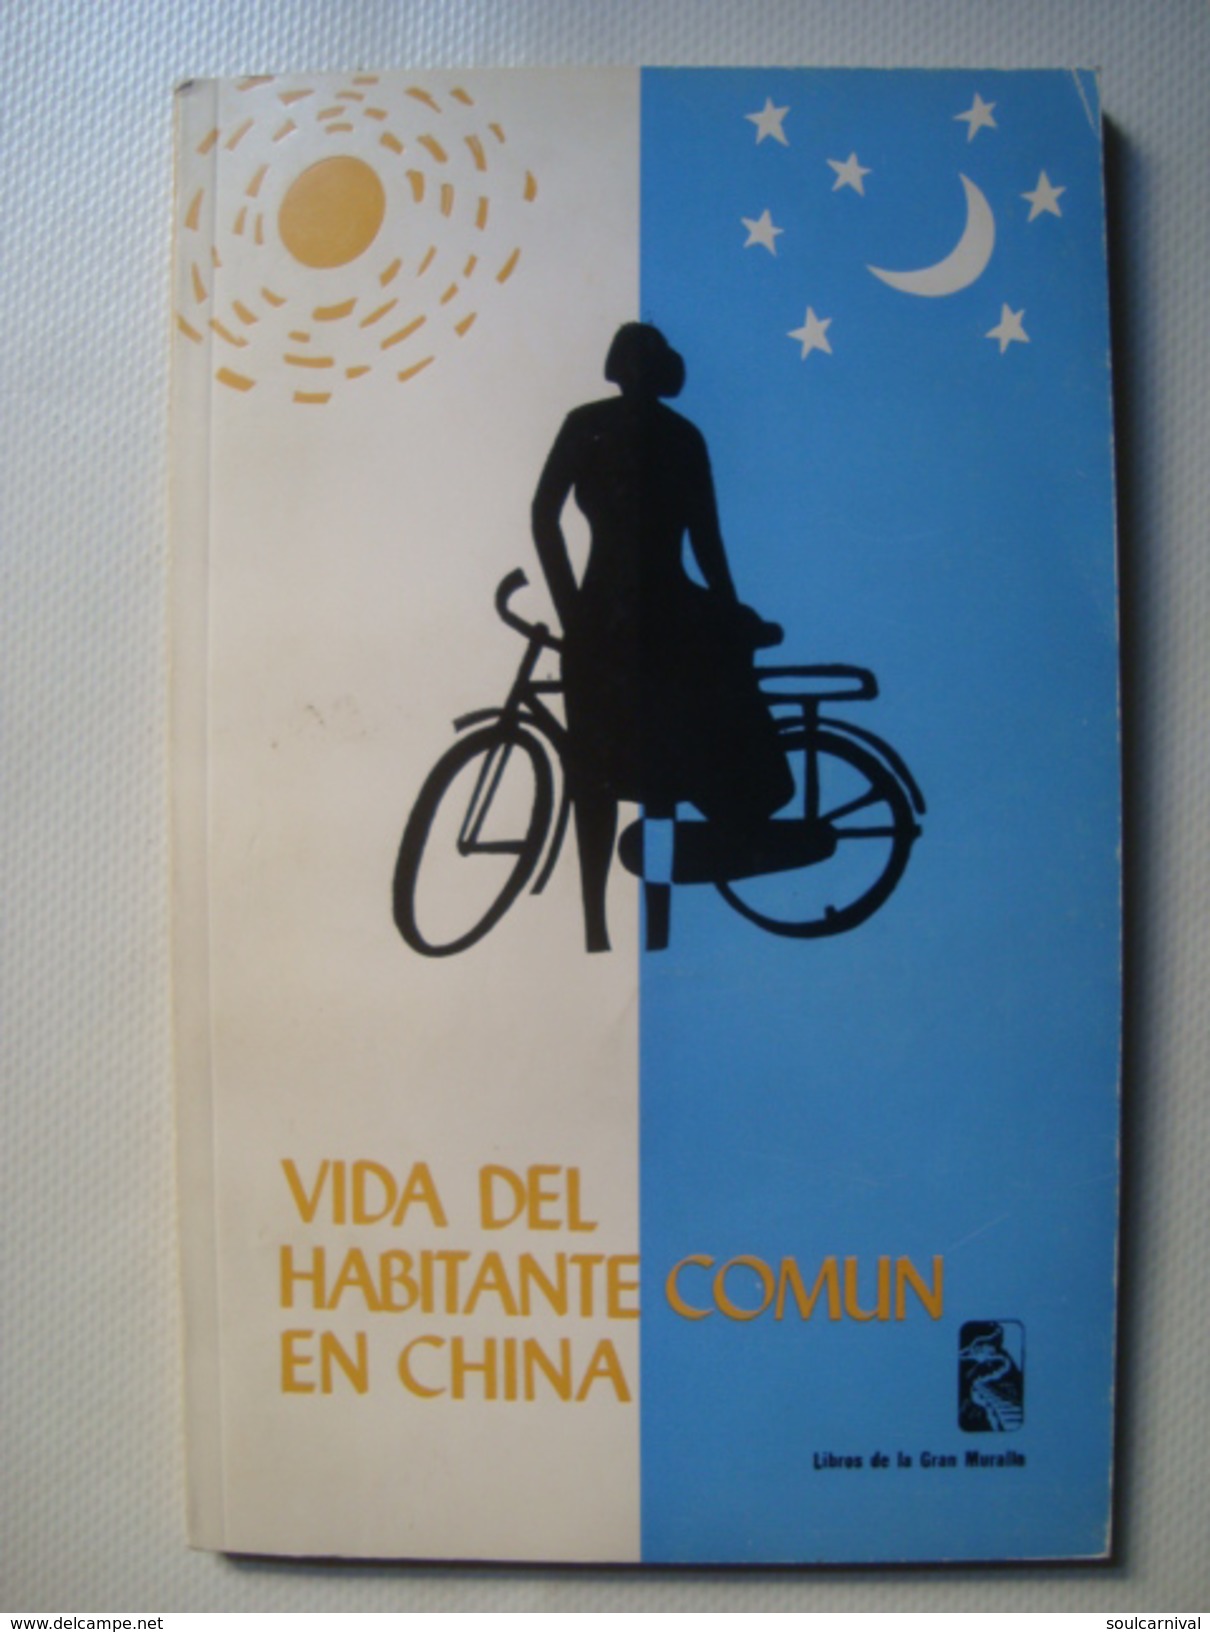 VIDA DEL HABITANTE COMÚN EN CHINA - EDITORIAL CHINA CONSTRUYE, 1988. SPANISH TEXT. B/W PHOTOS. - Histoire Et Art